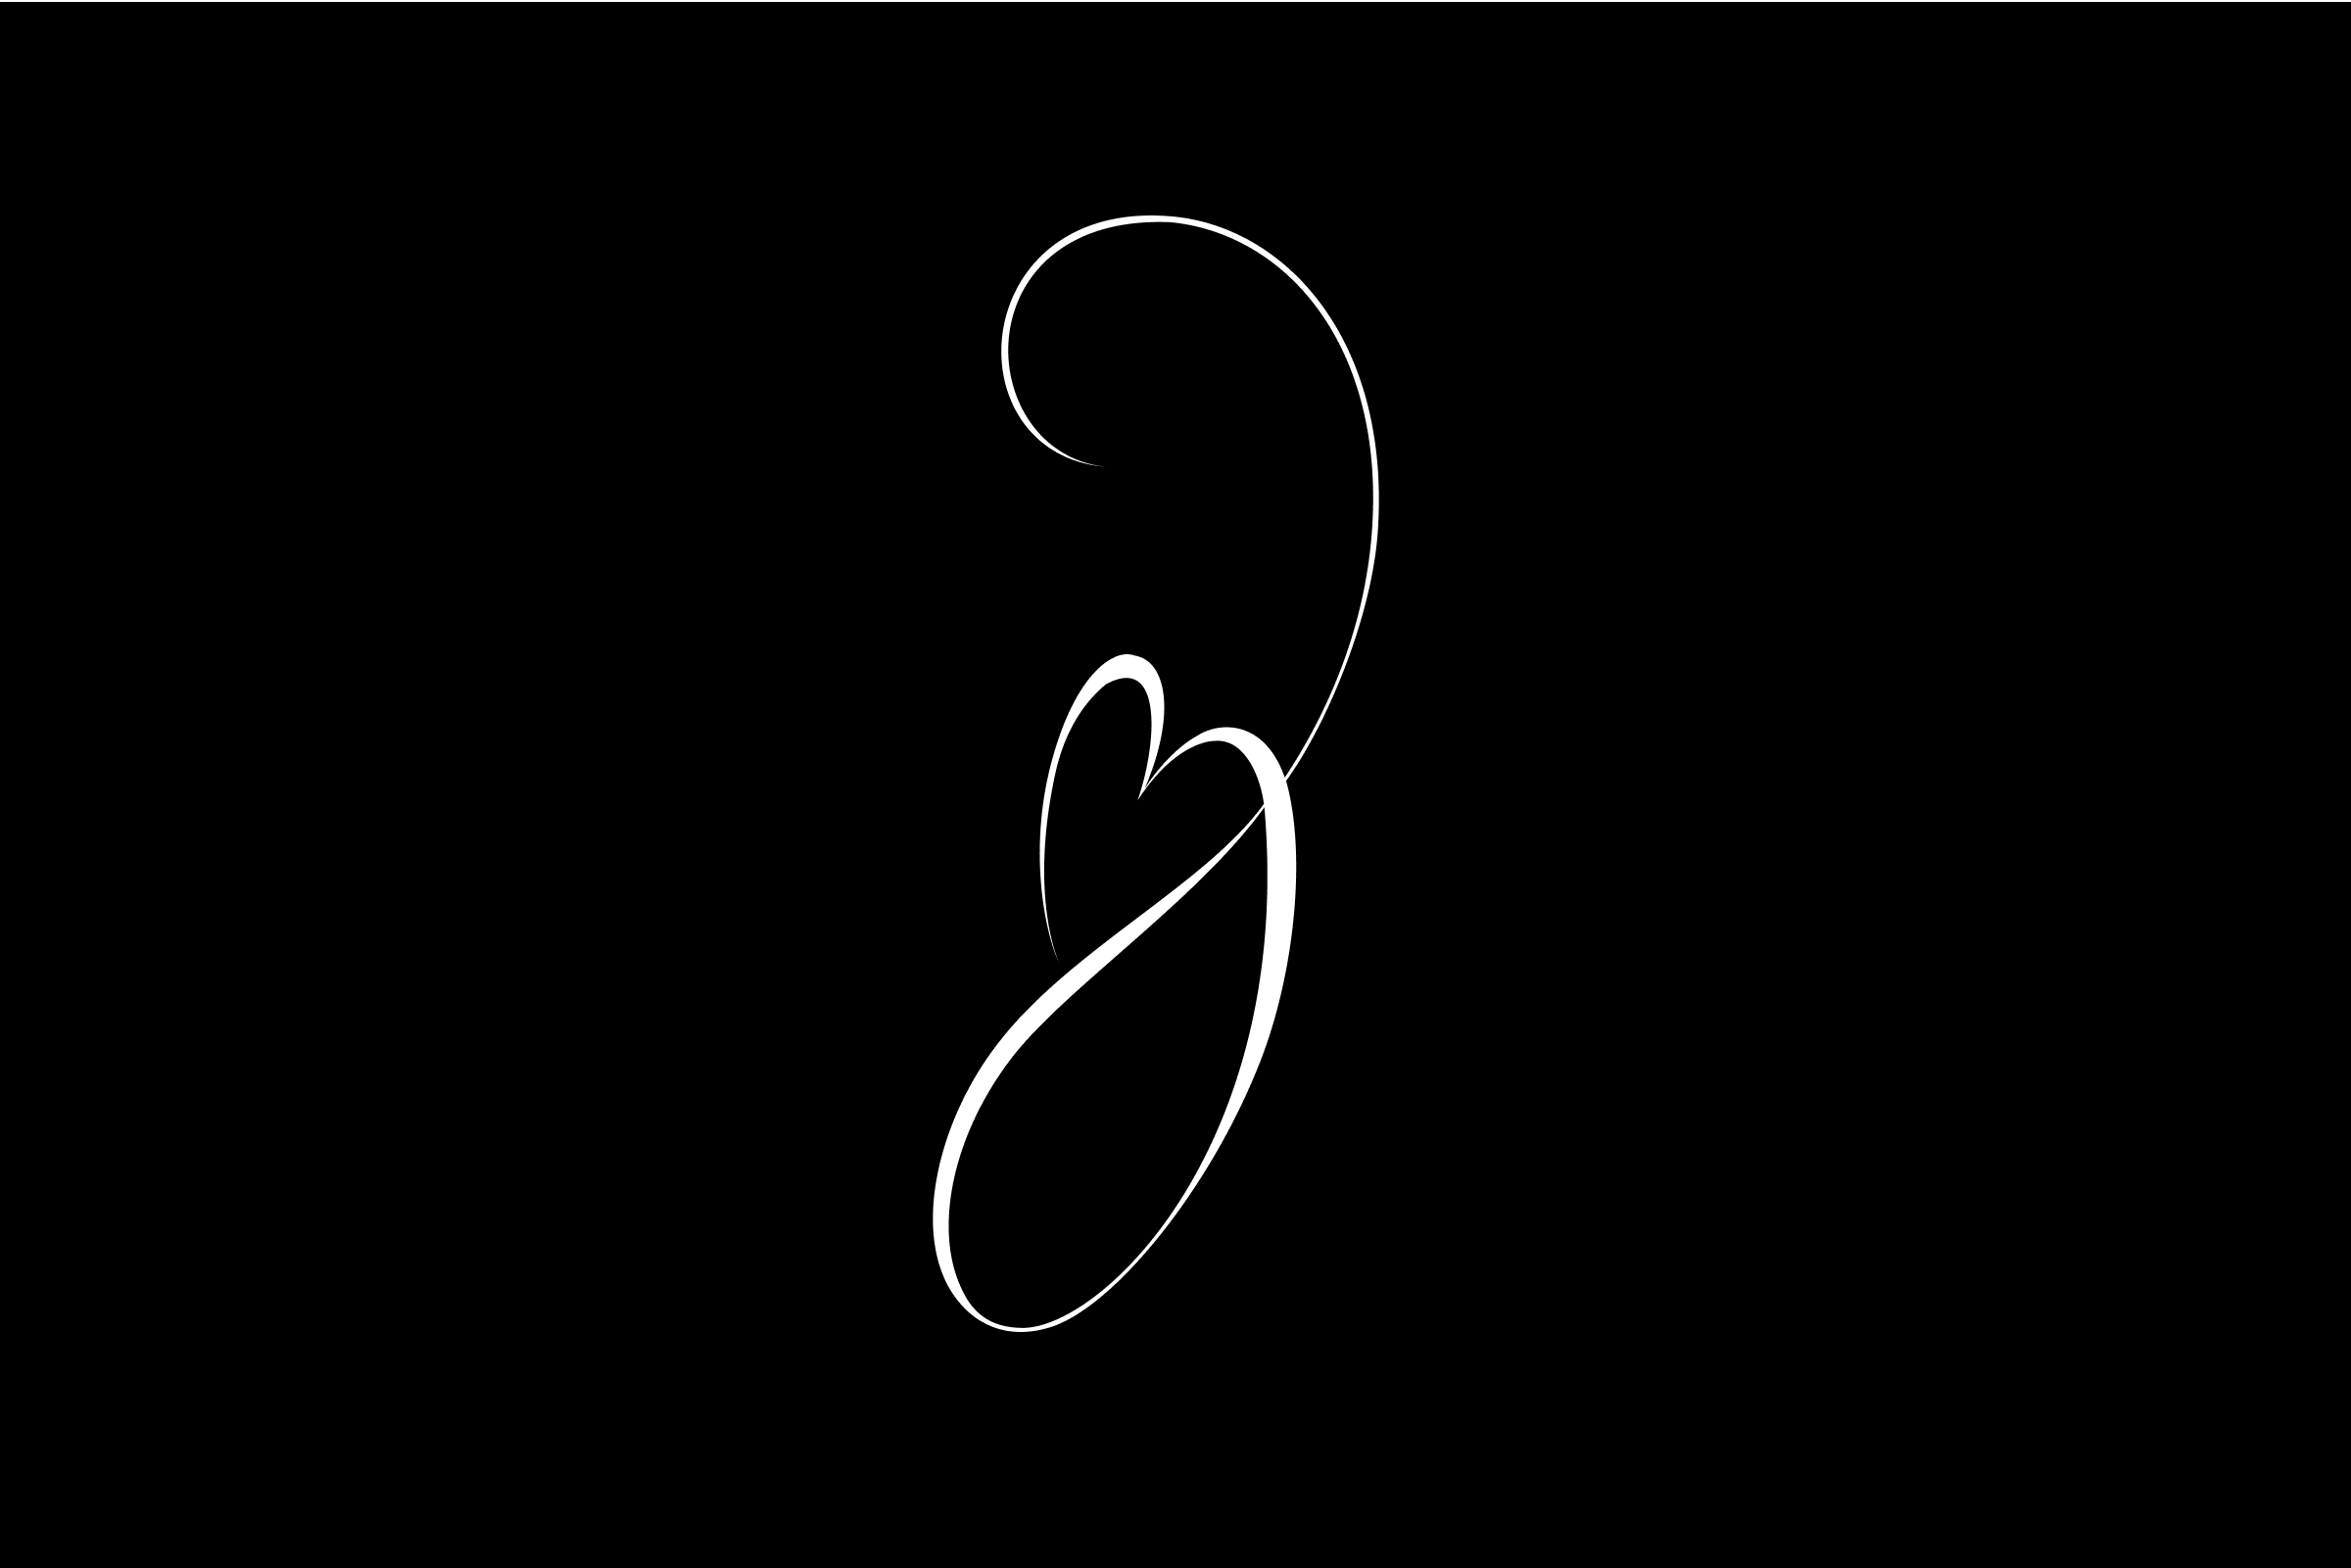 simon-p-coyle-branding-logo-design-2009-myron-zabol